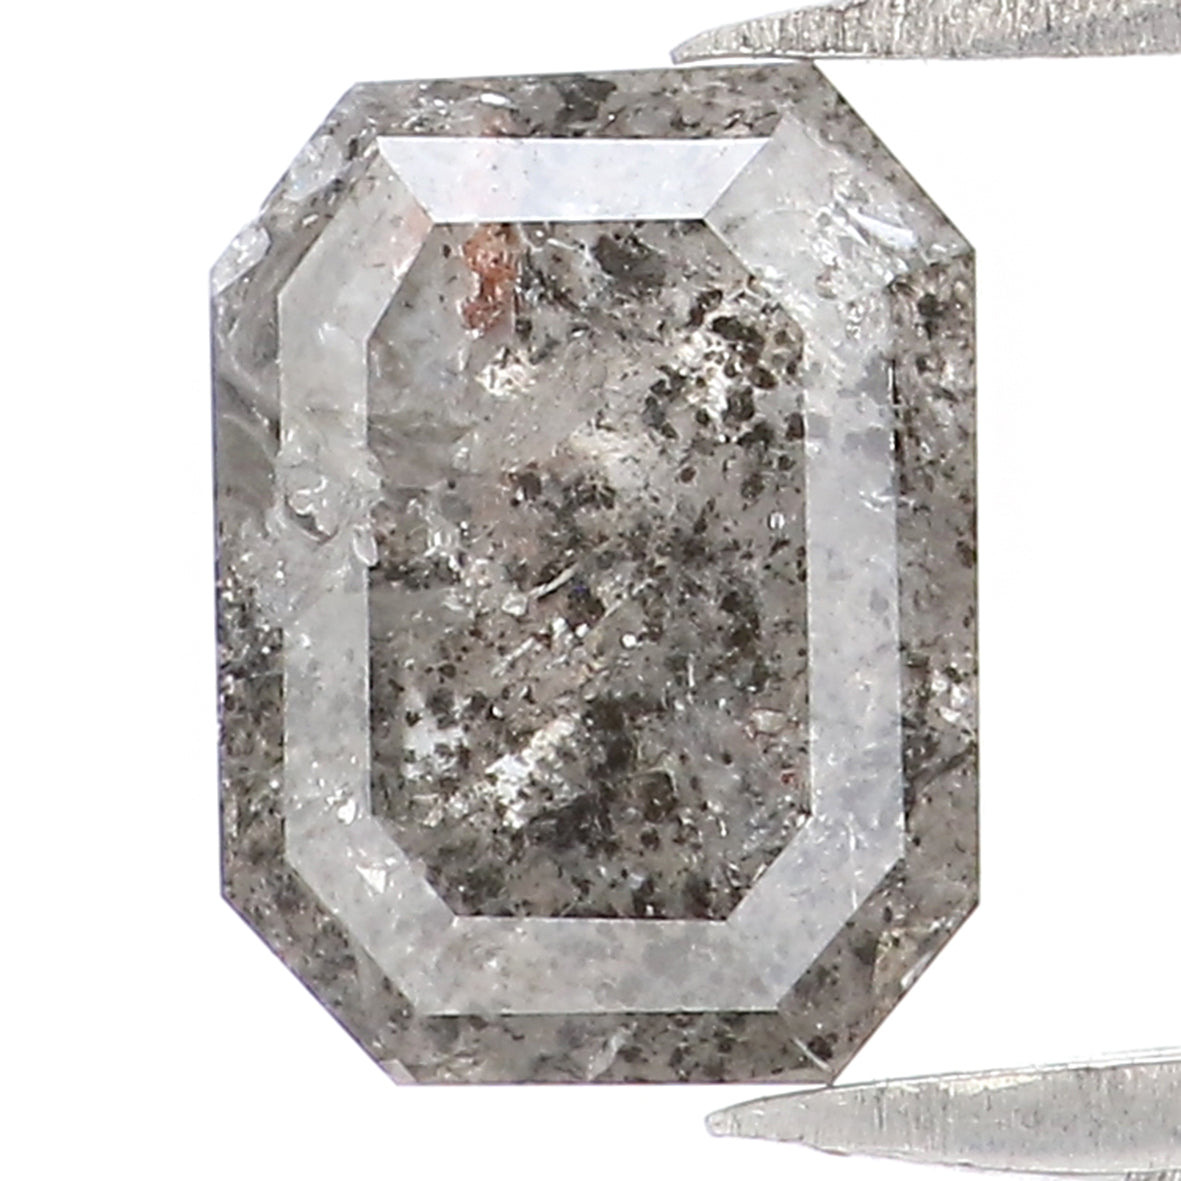 0.95 CT Natural Loose Emerald Shape Diamond Salt And Pepper Emerald Shape Diamond 6.65 MM Black Grey Color Emerald Rose Cut Diamond LQ2017